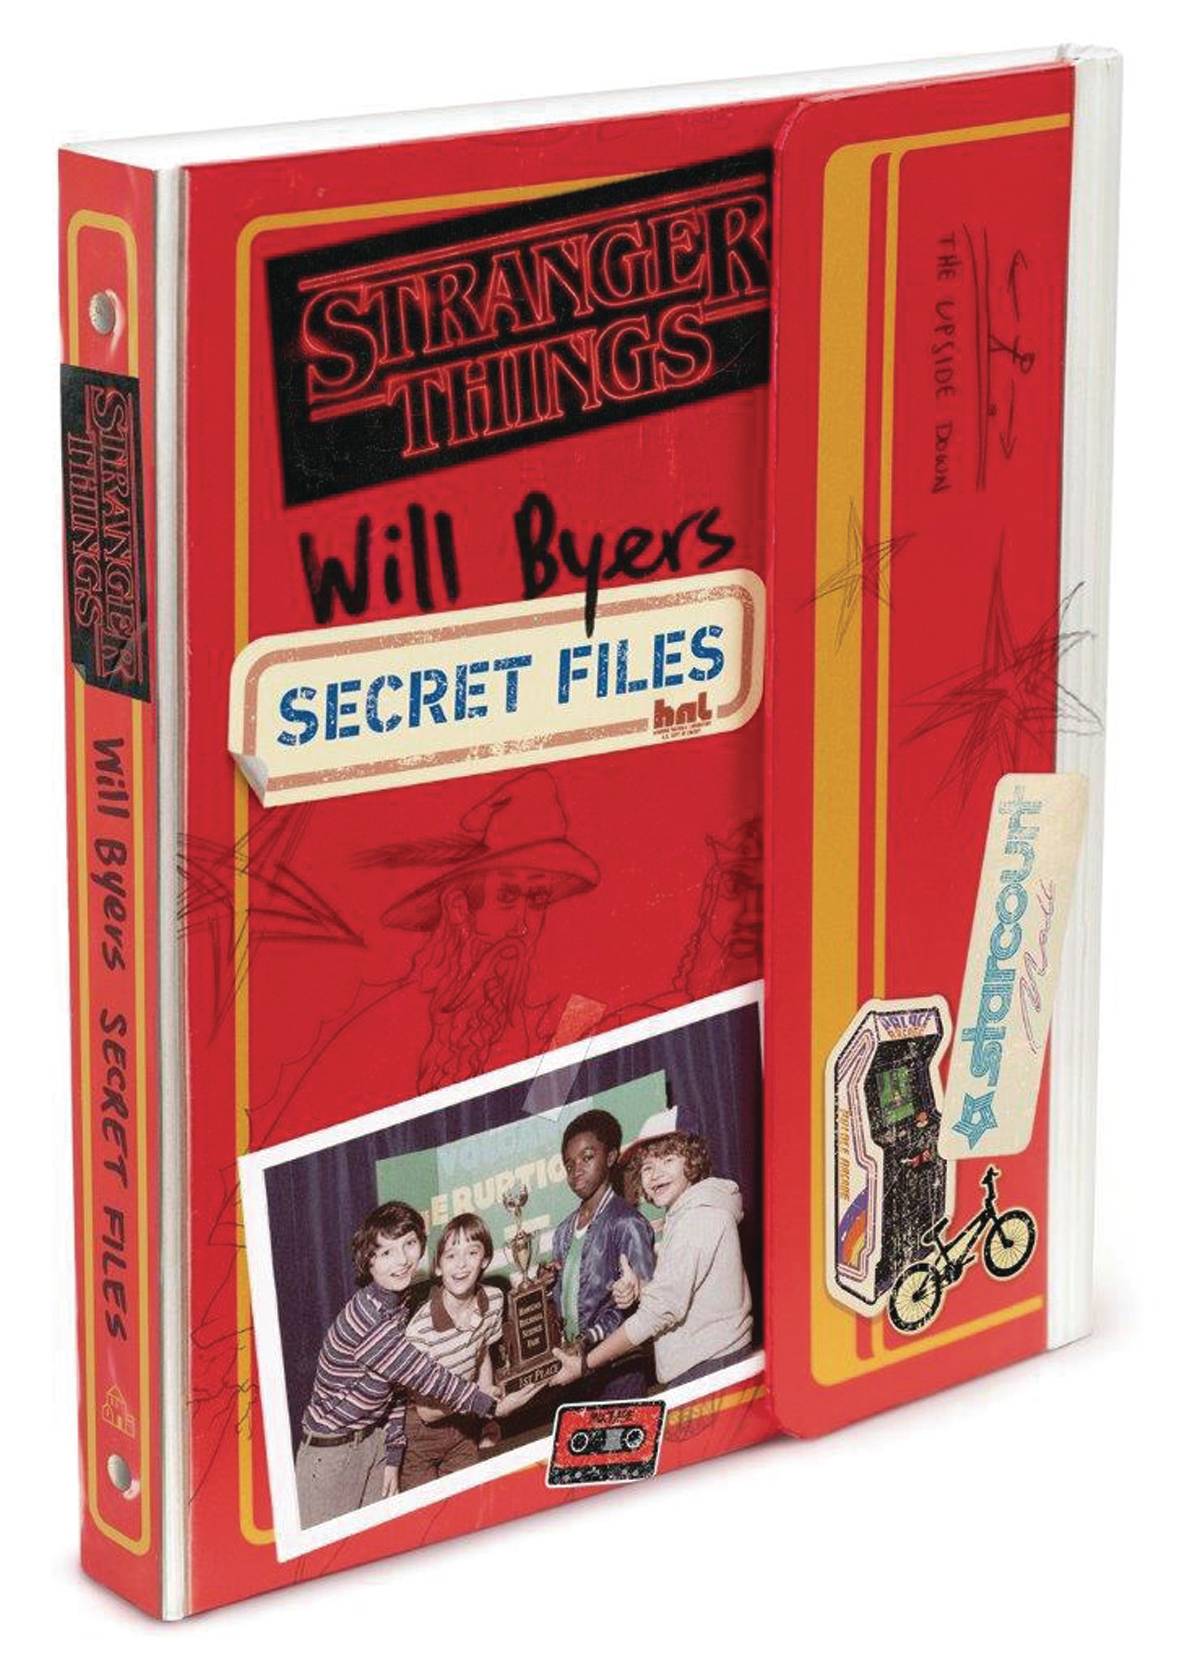 Will Byers Secret Files Hardcover